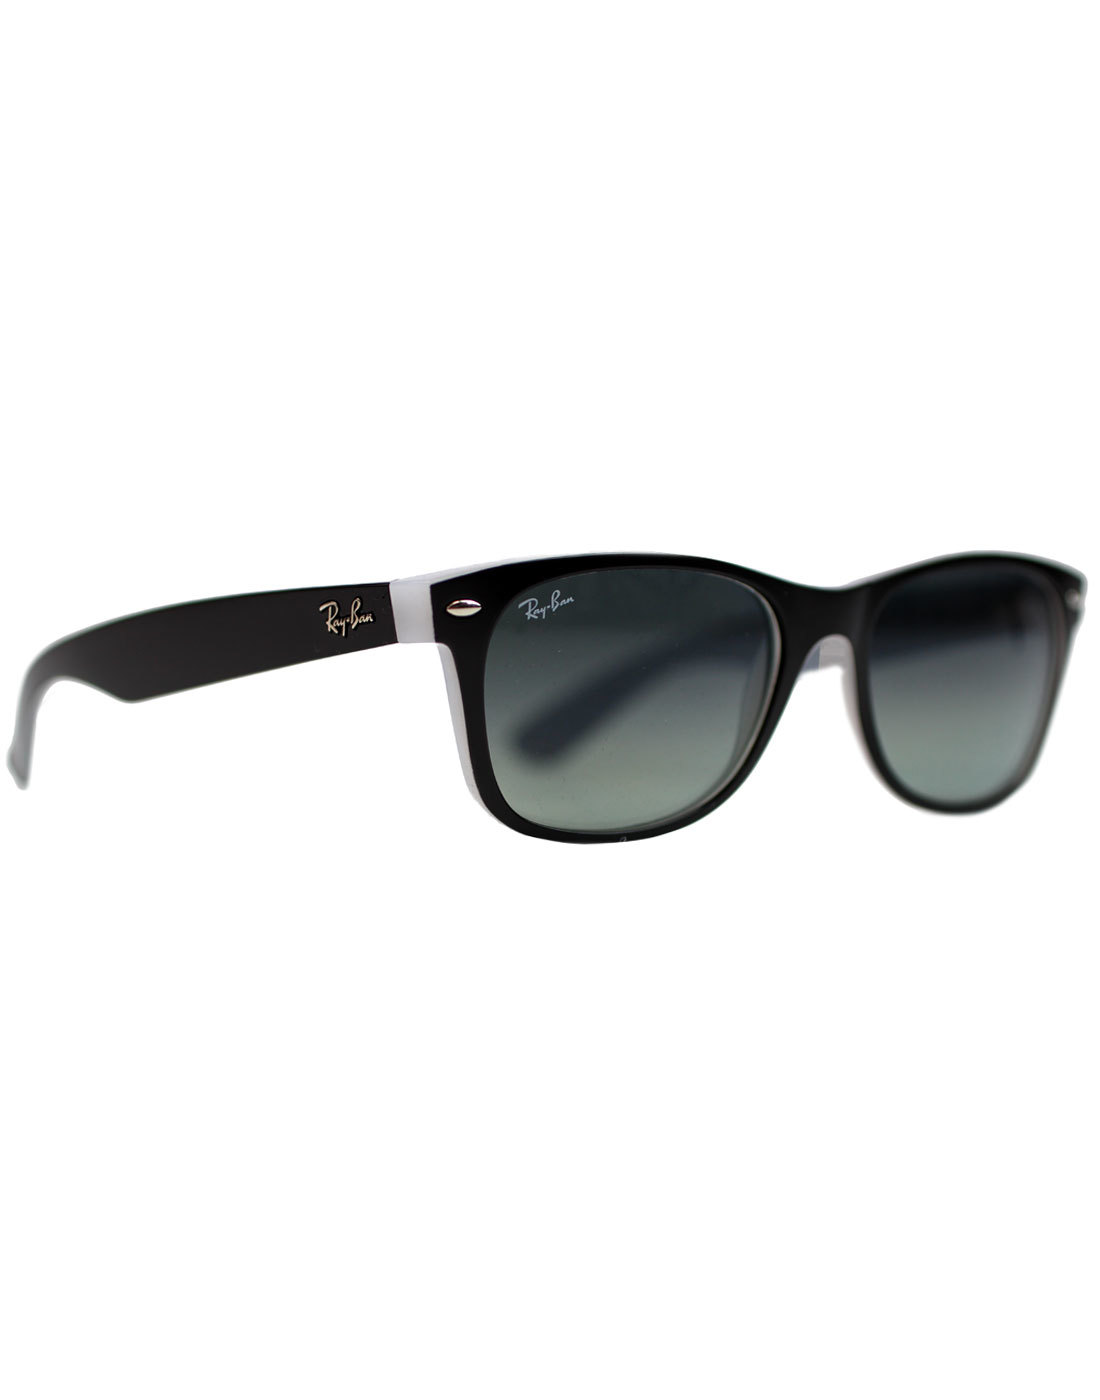 RAY-BAN New Wayfarer Retro Mod Sunglasses in Black/Ice 2-Tone